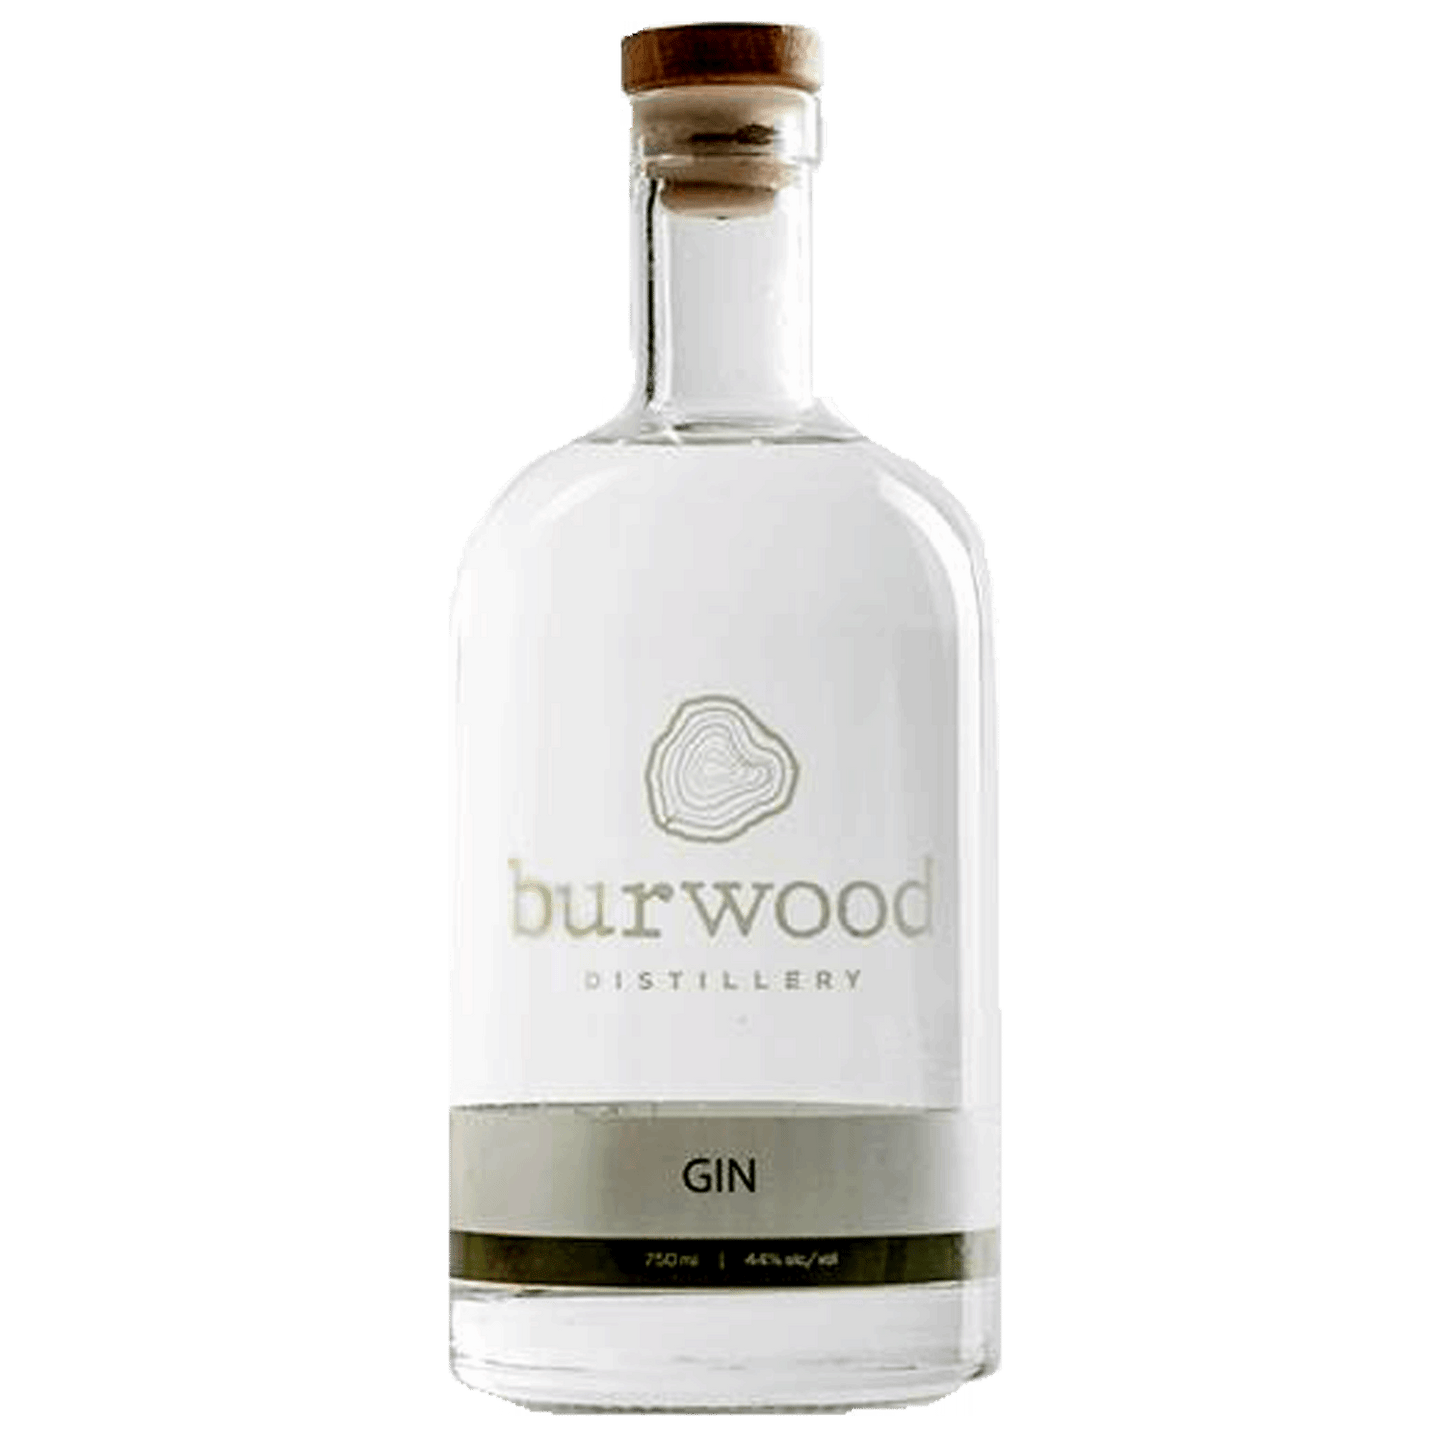 BURWOOD GIN